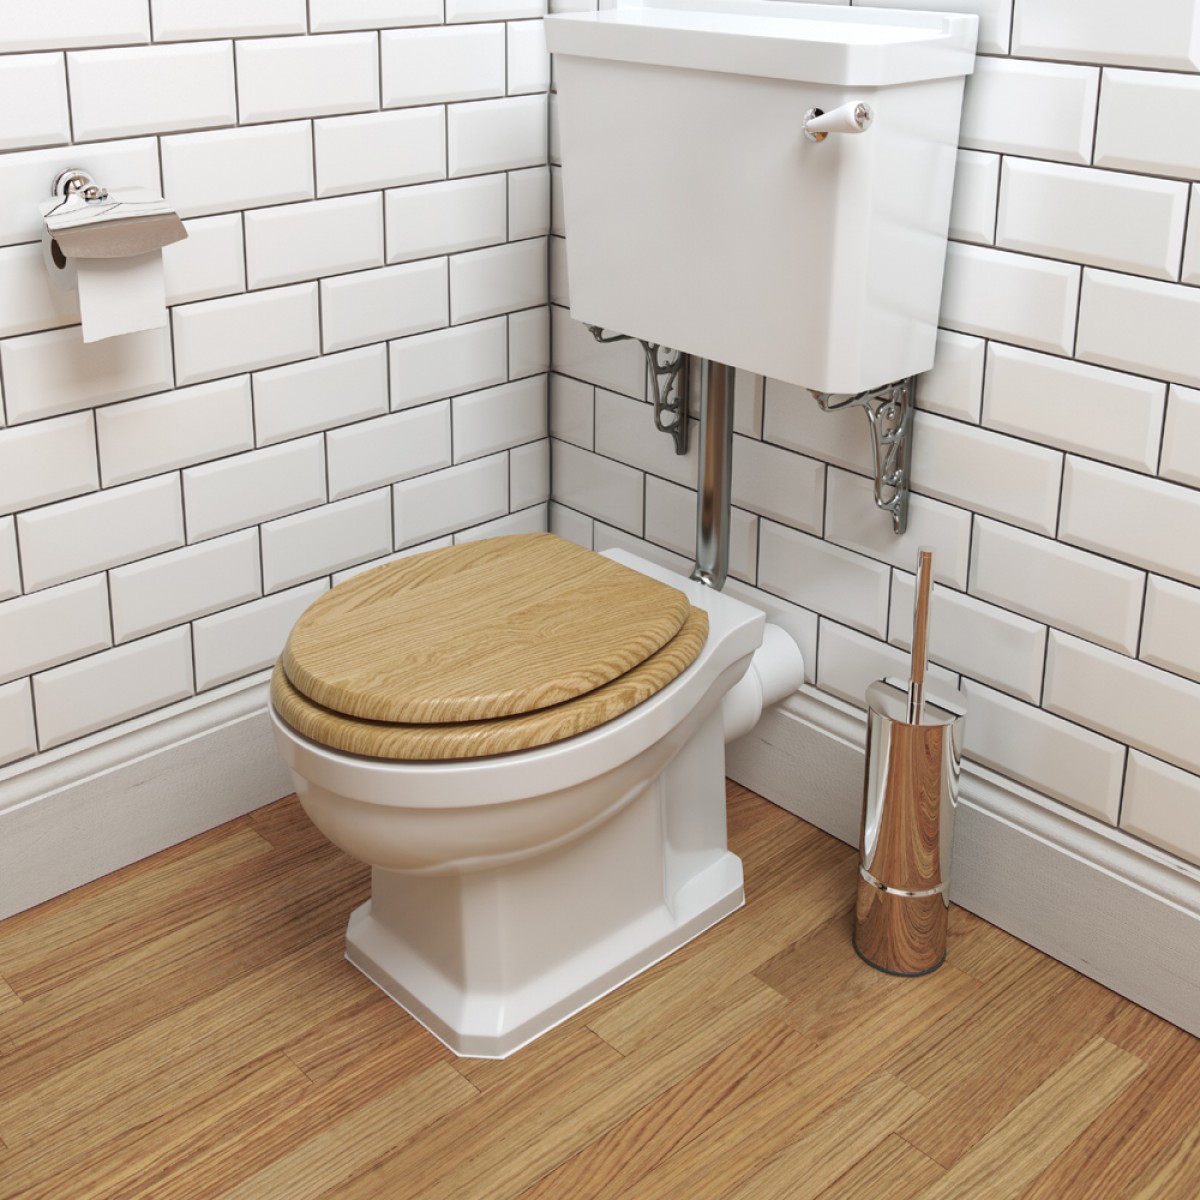 Best Flushing Toilets On The Market 2020